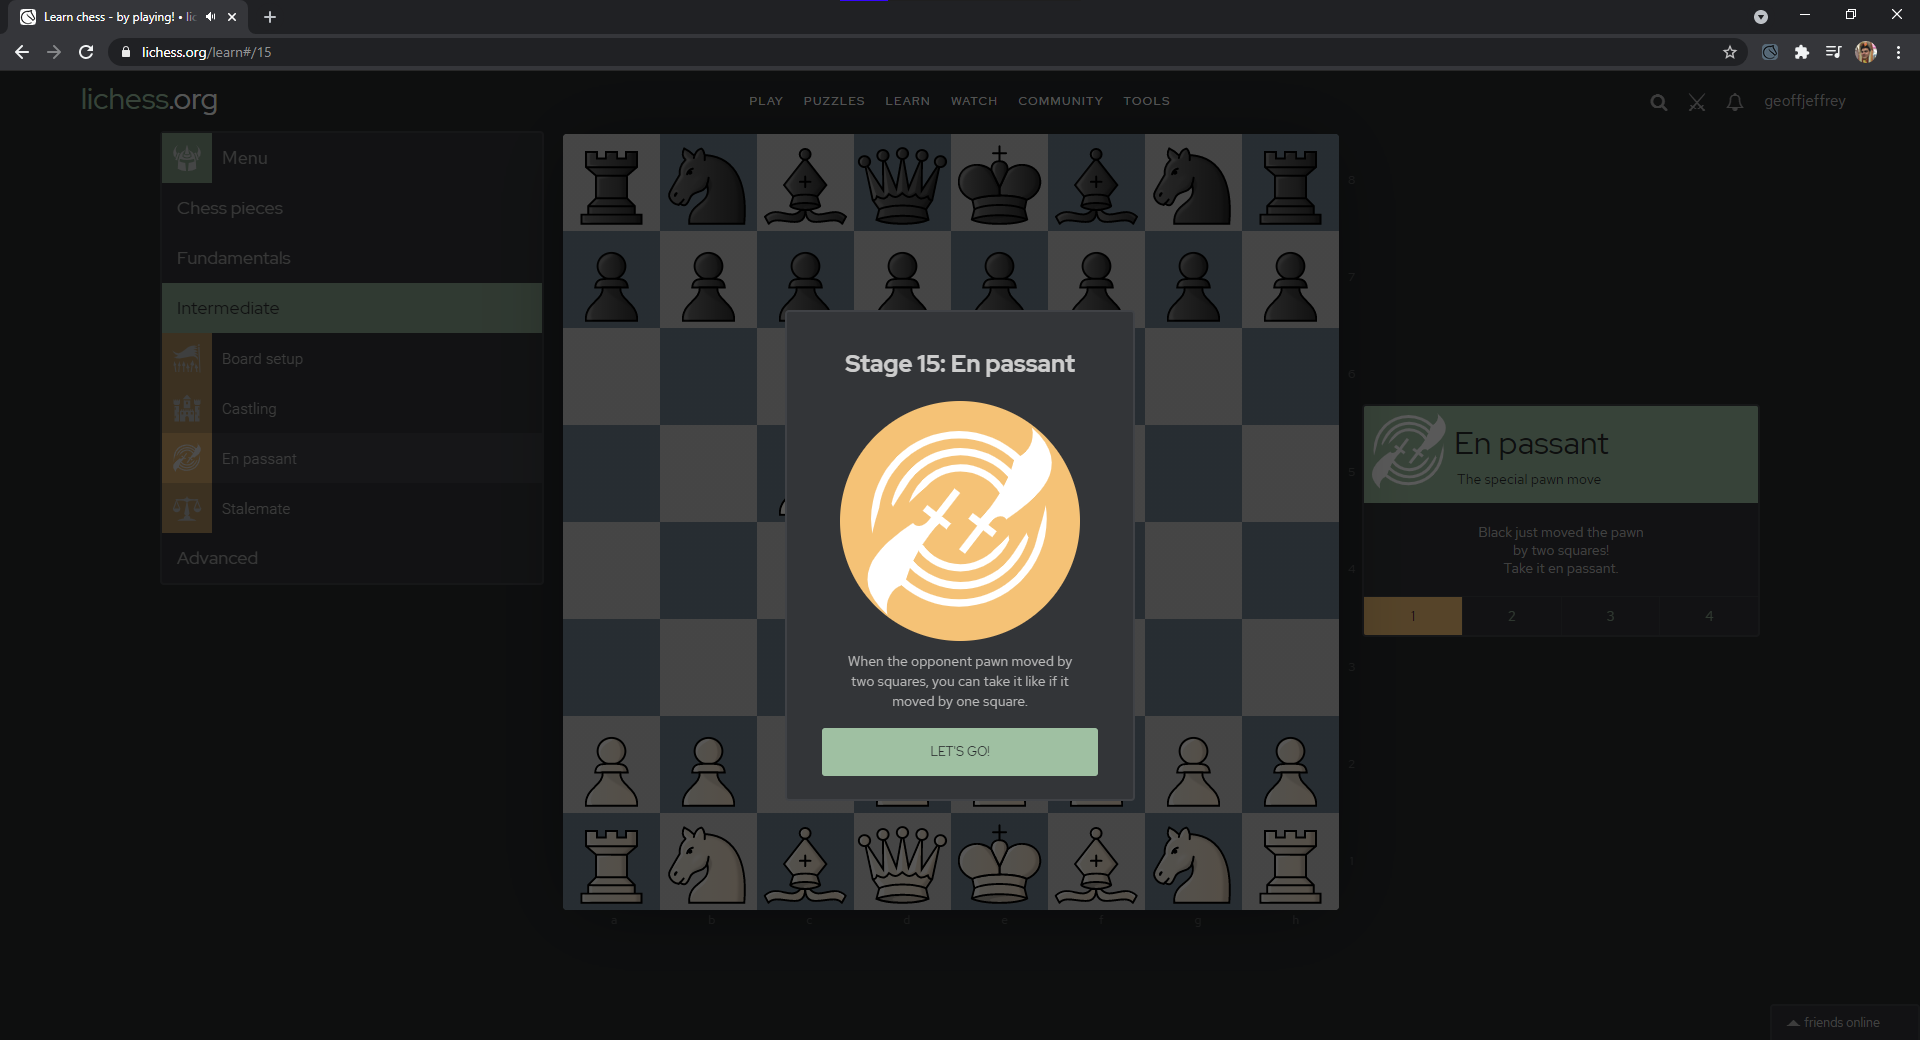 GitHub - alexbarrett/analyse-chesstempo-on-lichess: A browser